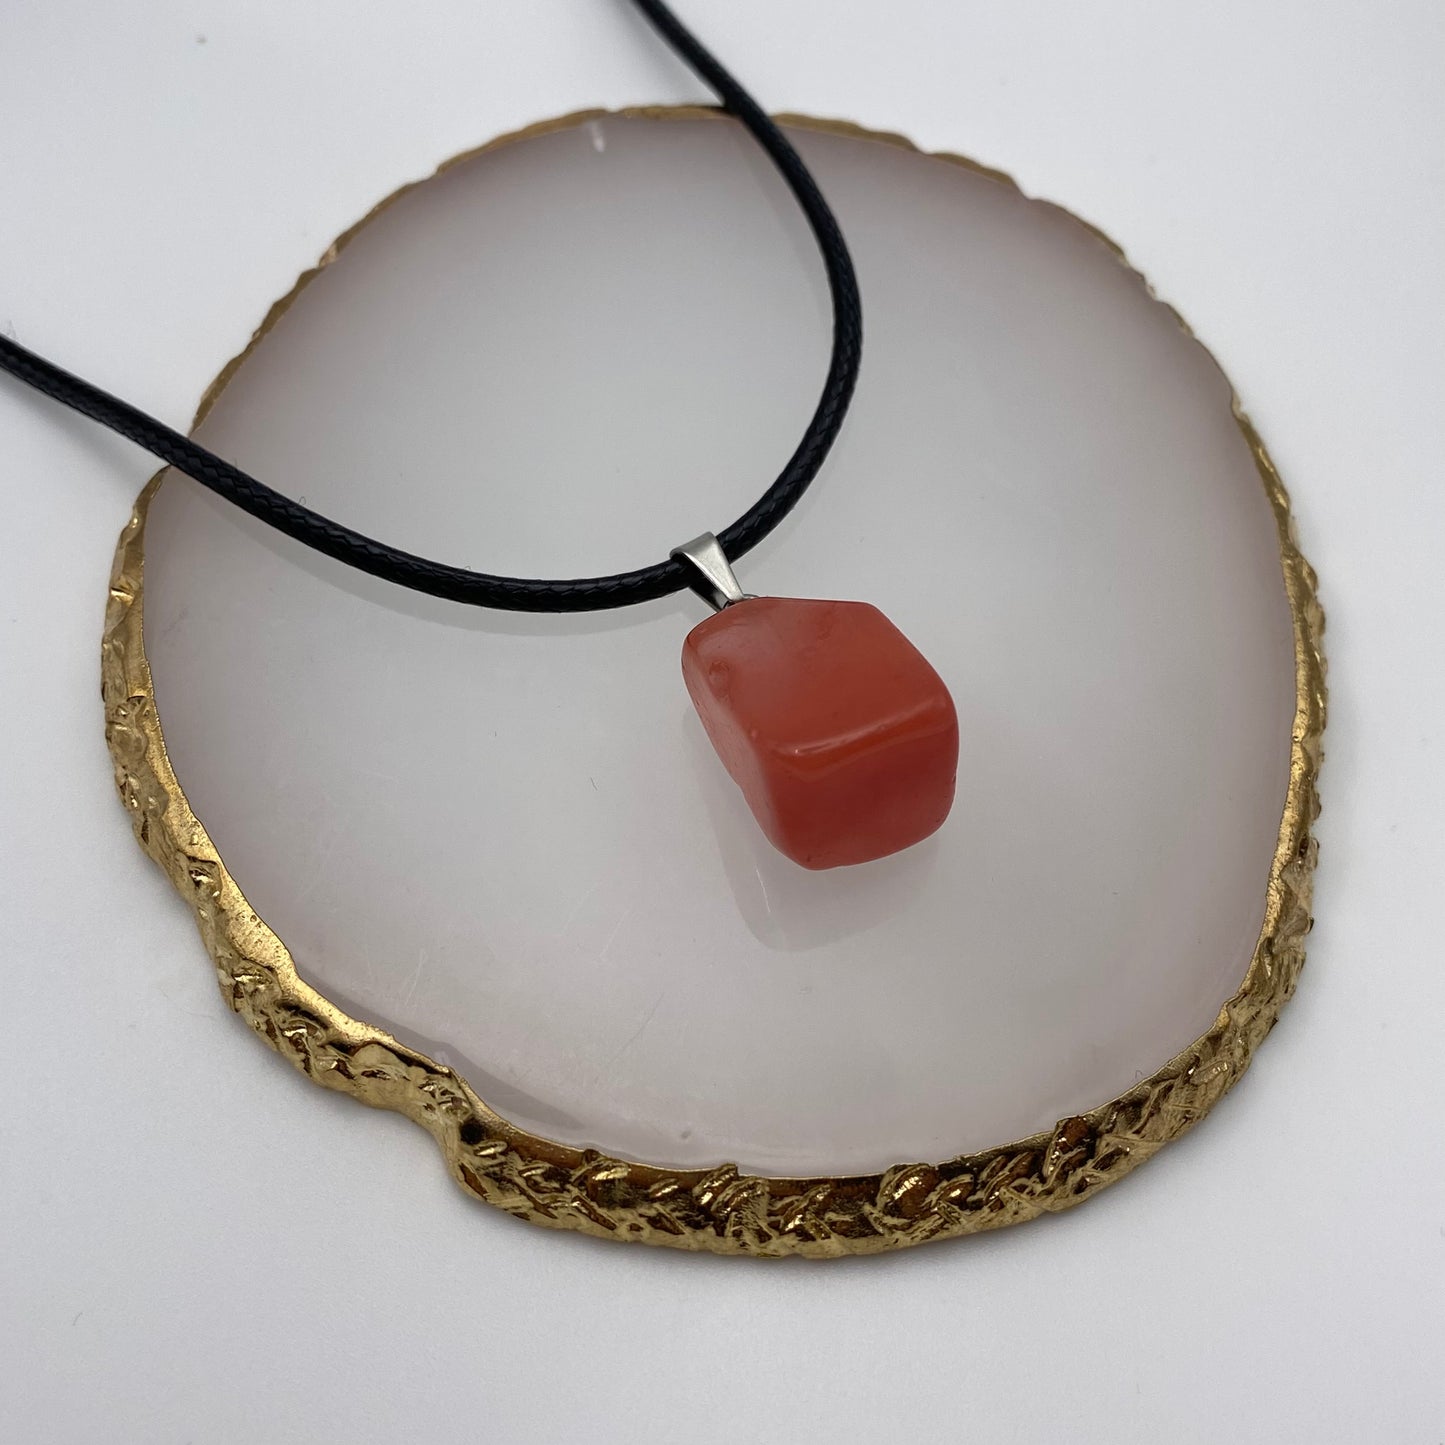 Cherry Quartz Crystal Chunk Necklace on Black Cord